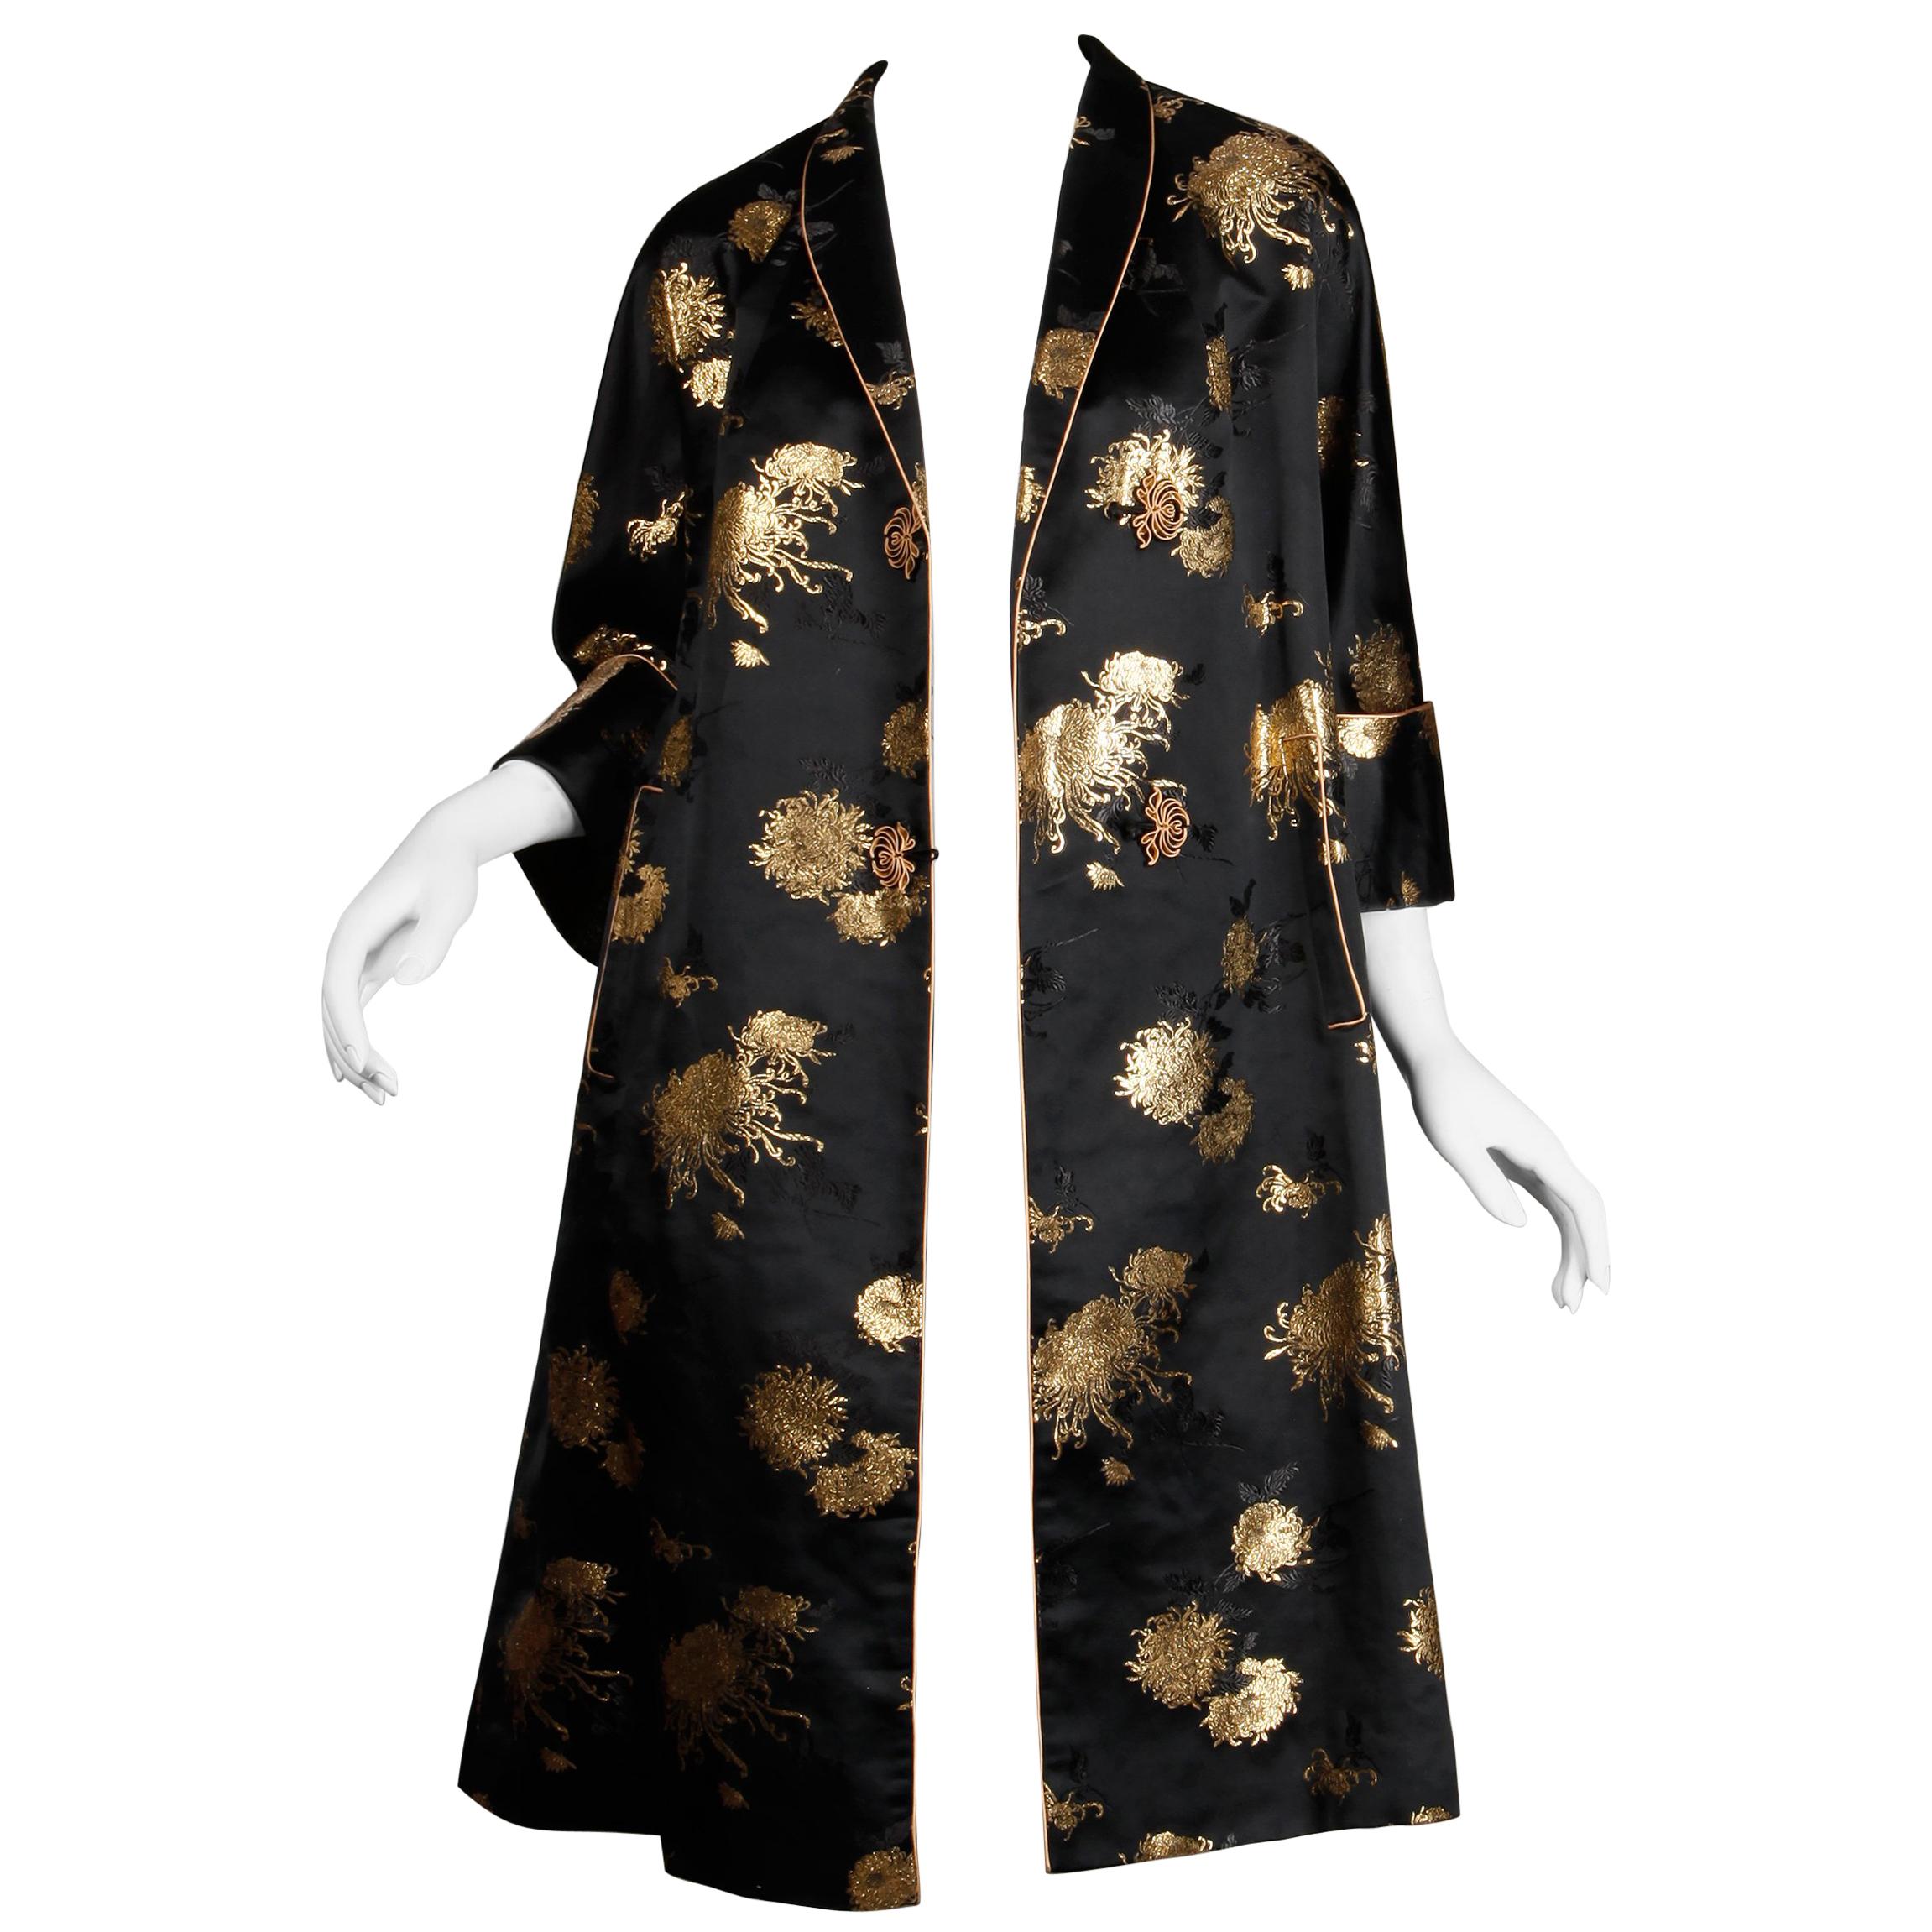 Stunning 1960s Vintage Black + Metallic Gold Silk Satin Evening or Opera Coat